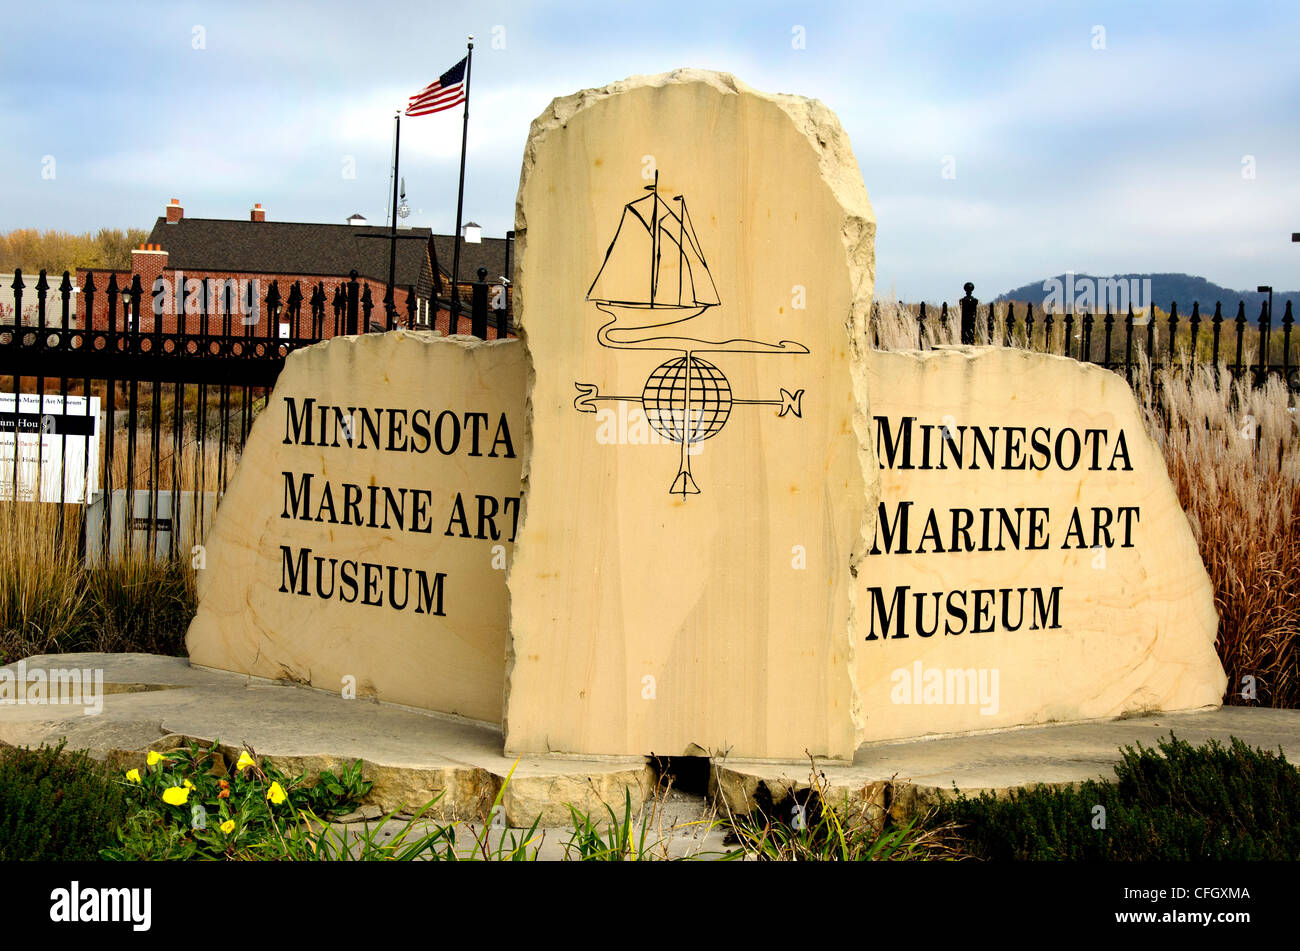 The Minnesota Marine Art Museum in Winona, Minnesota features art inspired by water. Stock Photo